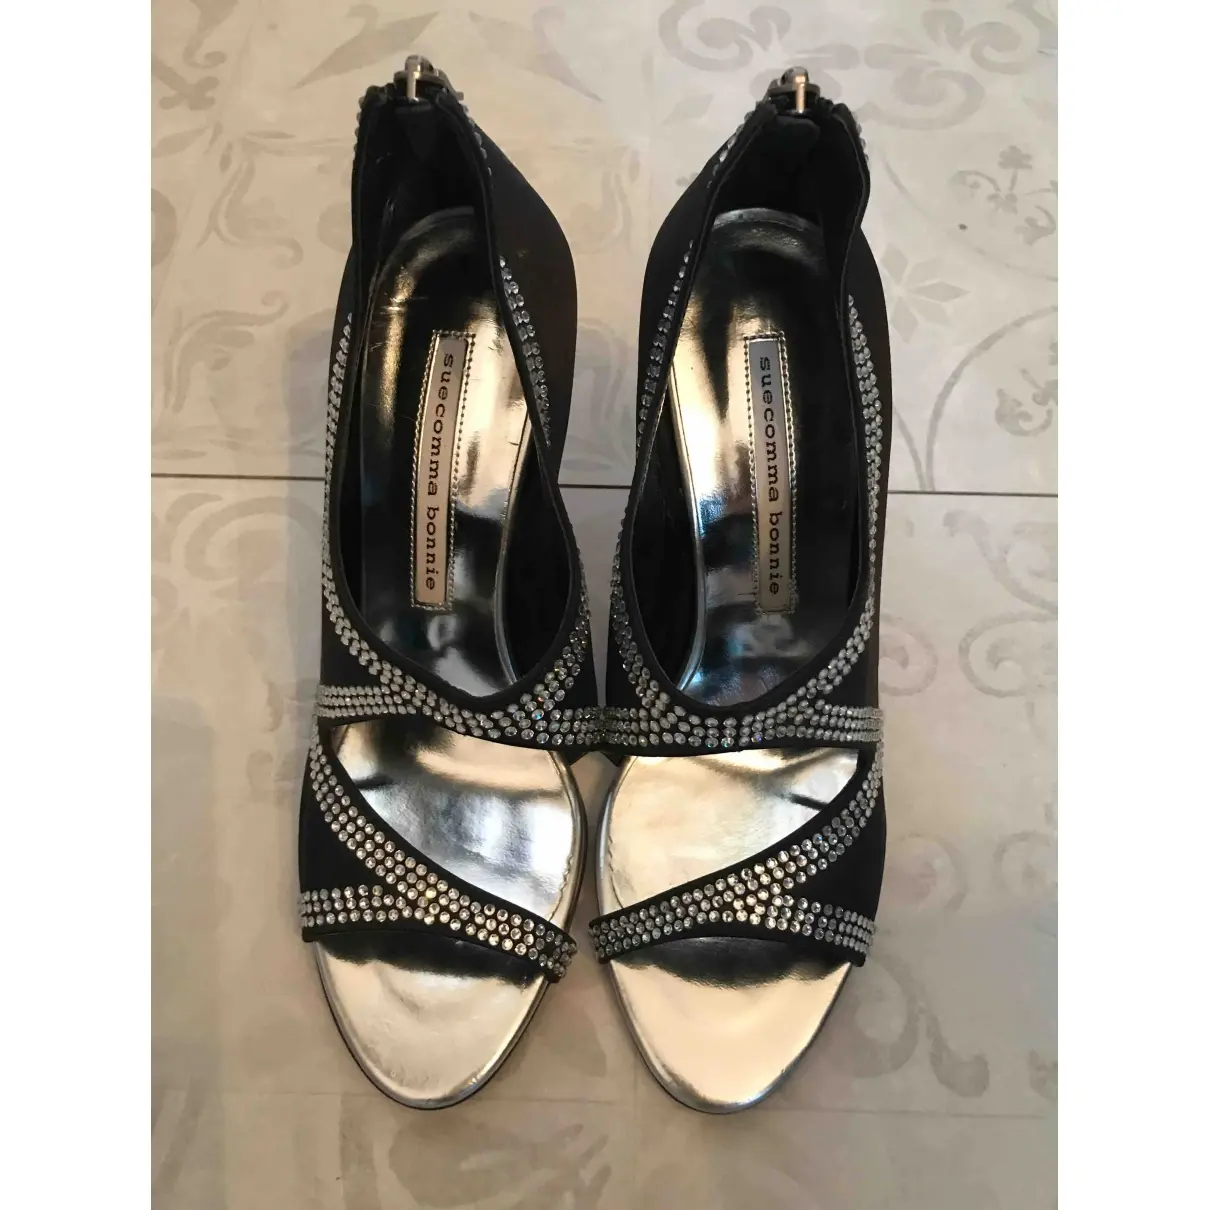 Suecomma Bonnie Glitter heels for sale